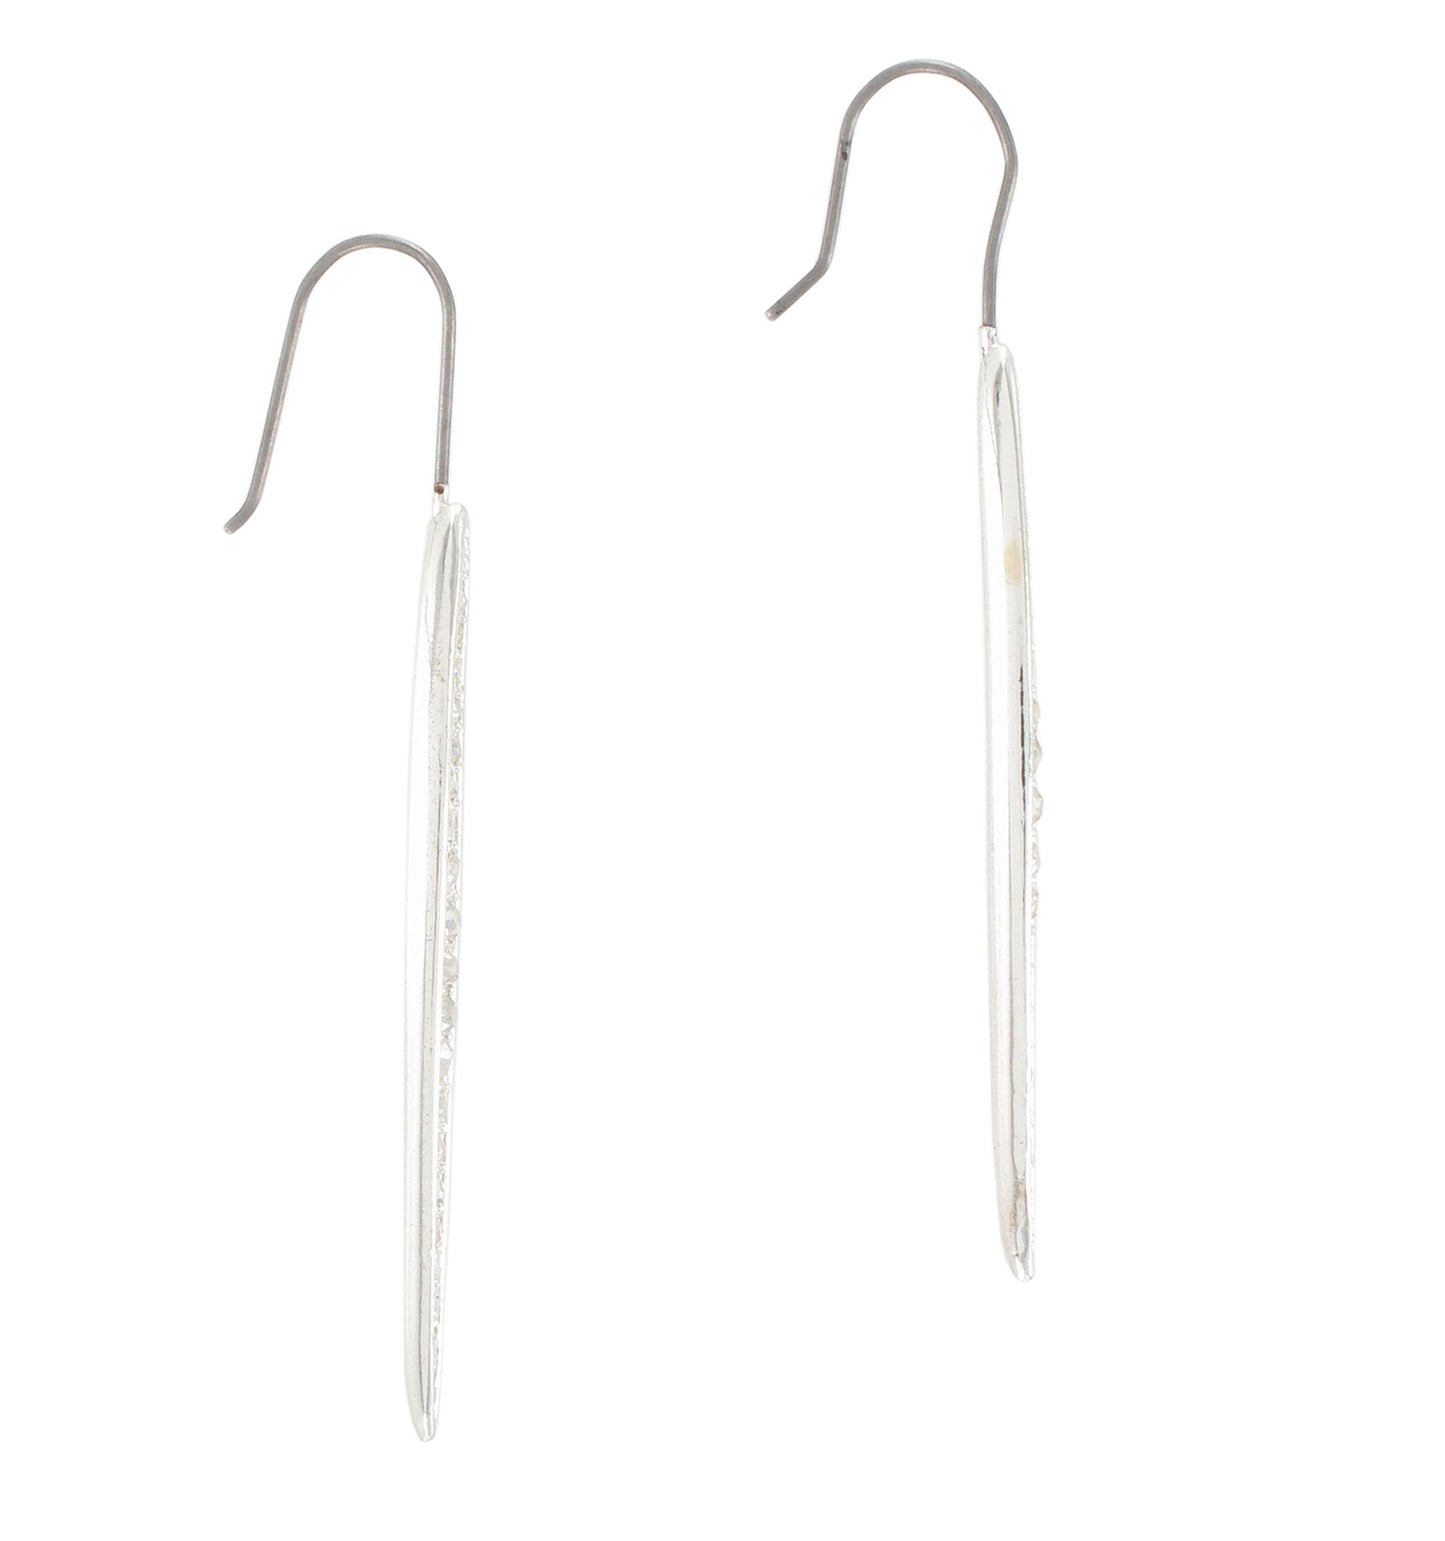 The Limited Silver Tone Pierced Earrings Rhinestone Stick Long 2"